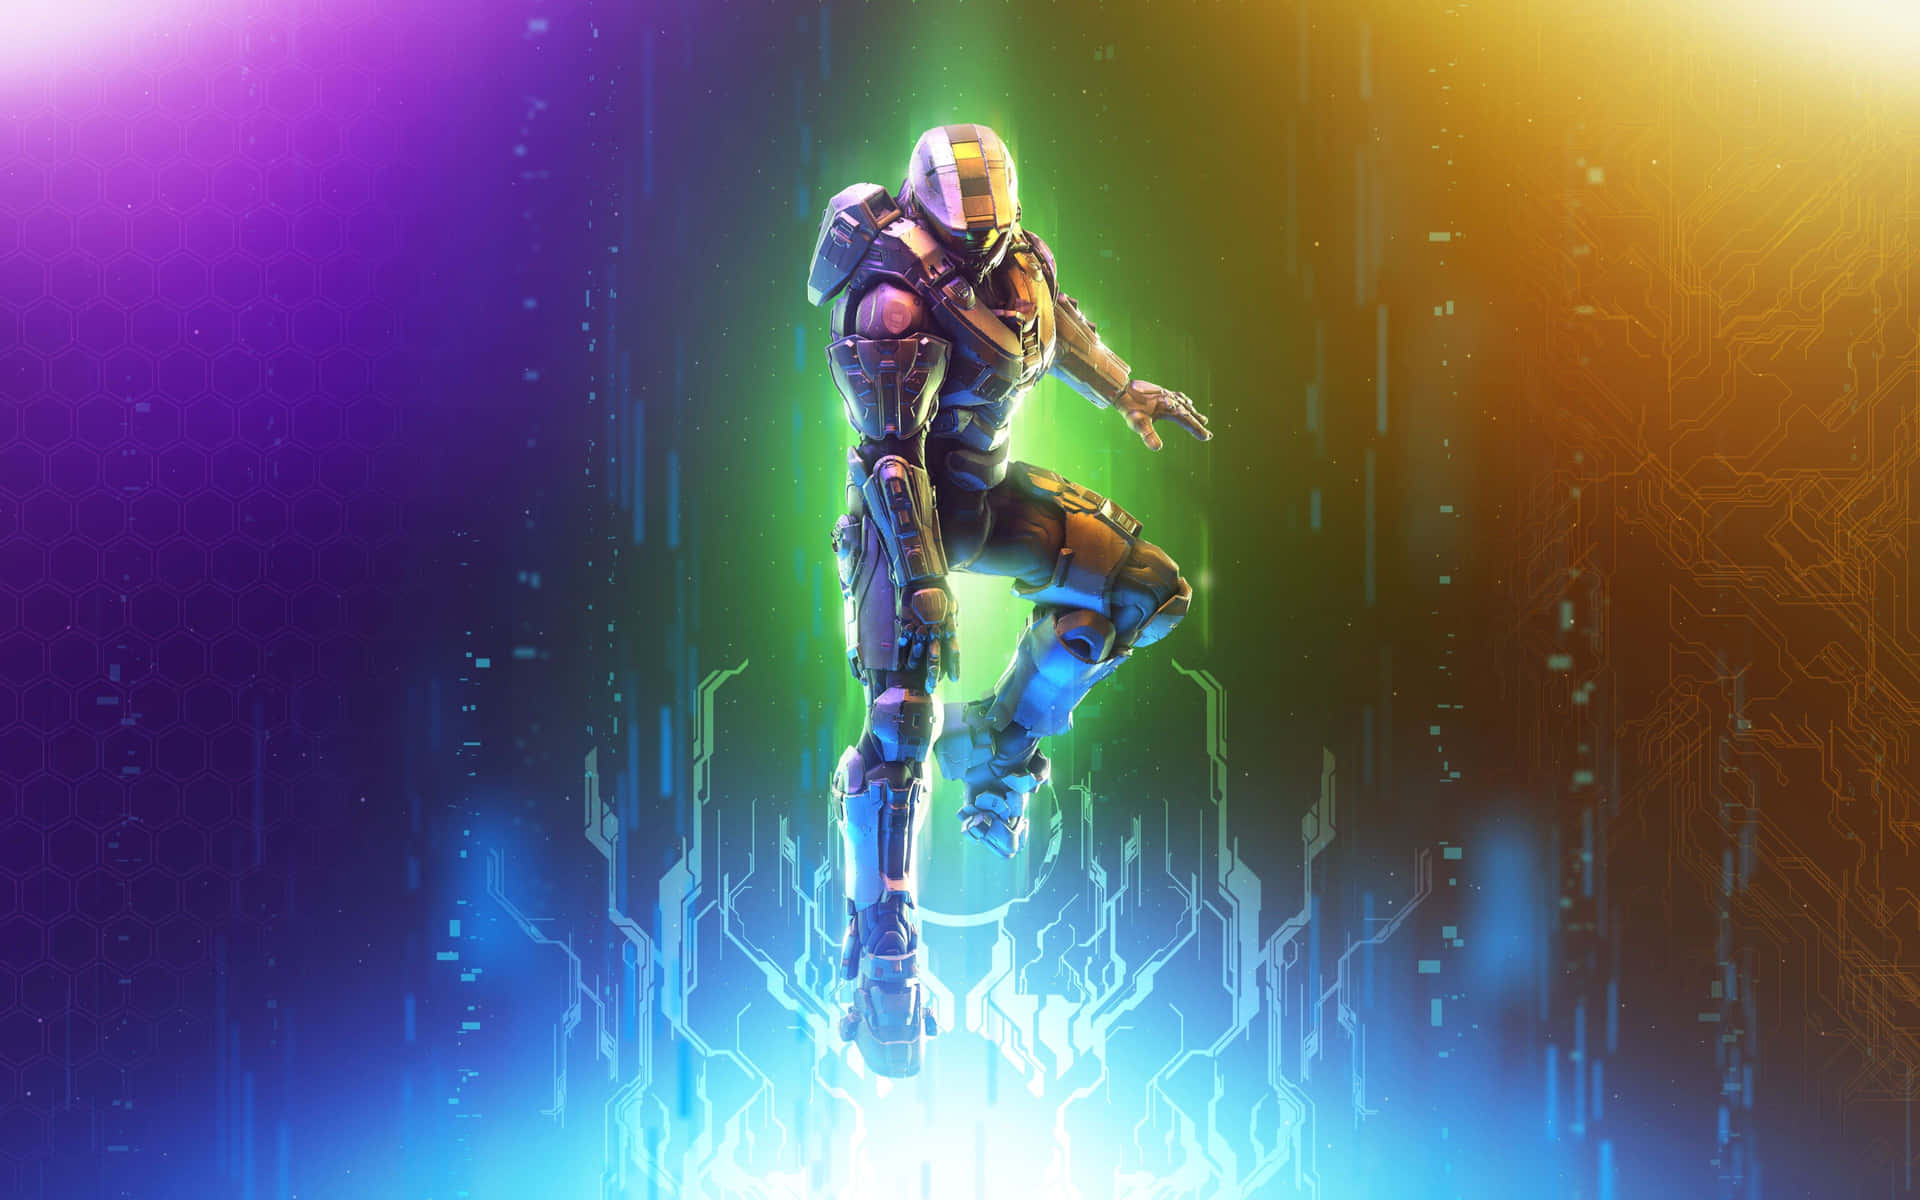 Helten fra Halo Universet – Master Chief. Wallpaper